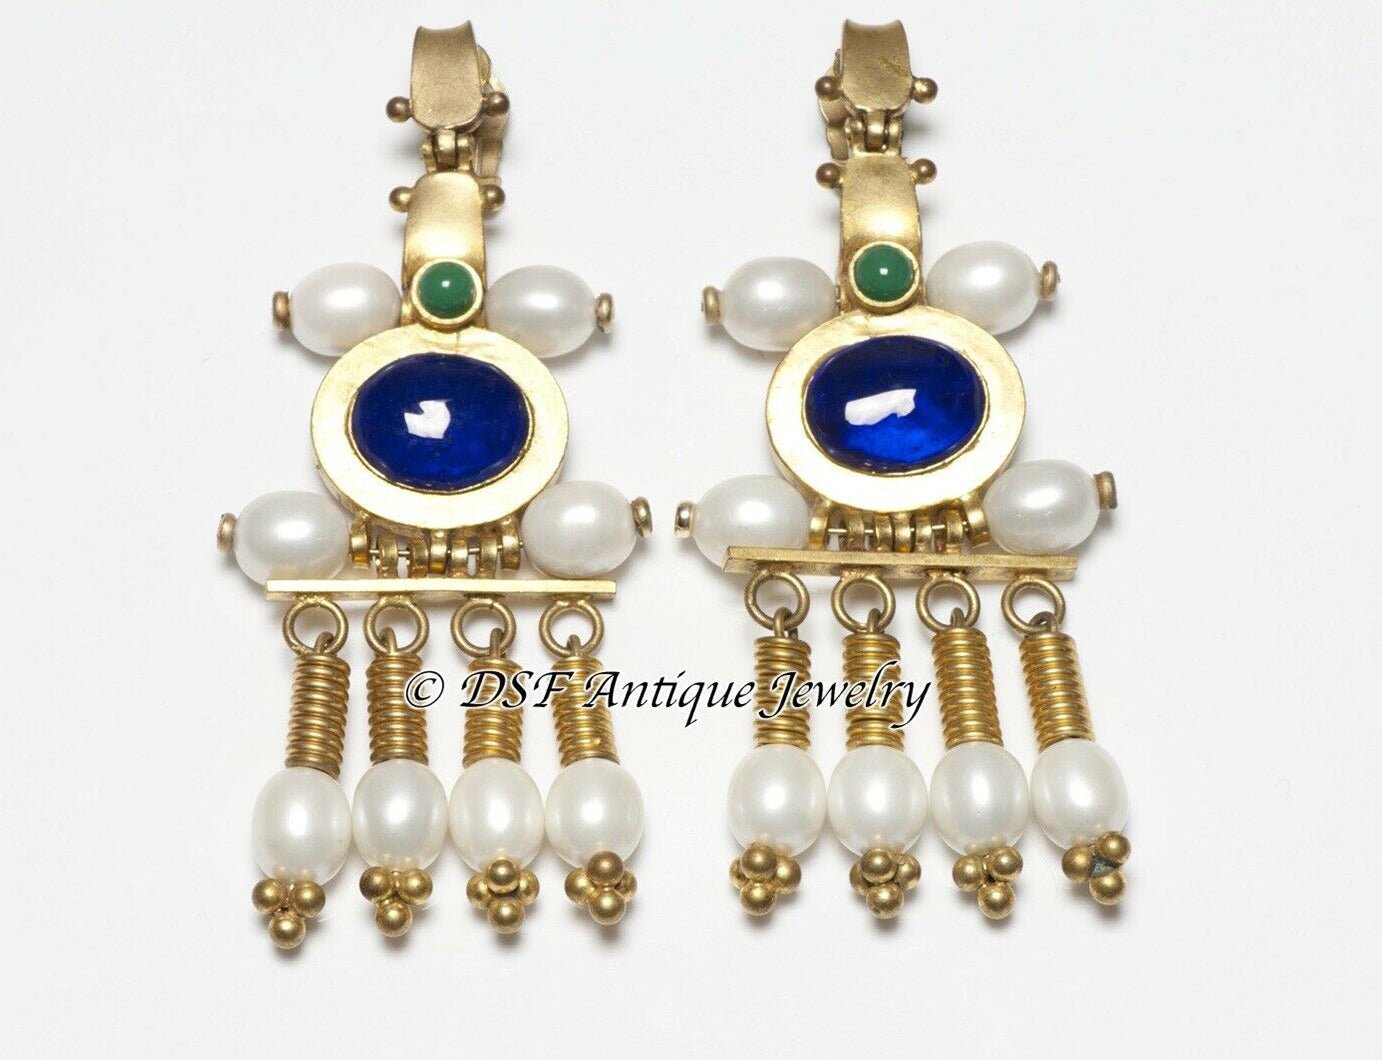 CHANEL Paris 1989 Gripoix Byzantine Style Pearl Blue Green Glass Earrings - DSF Antique Jewelry